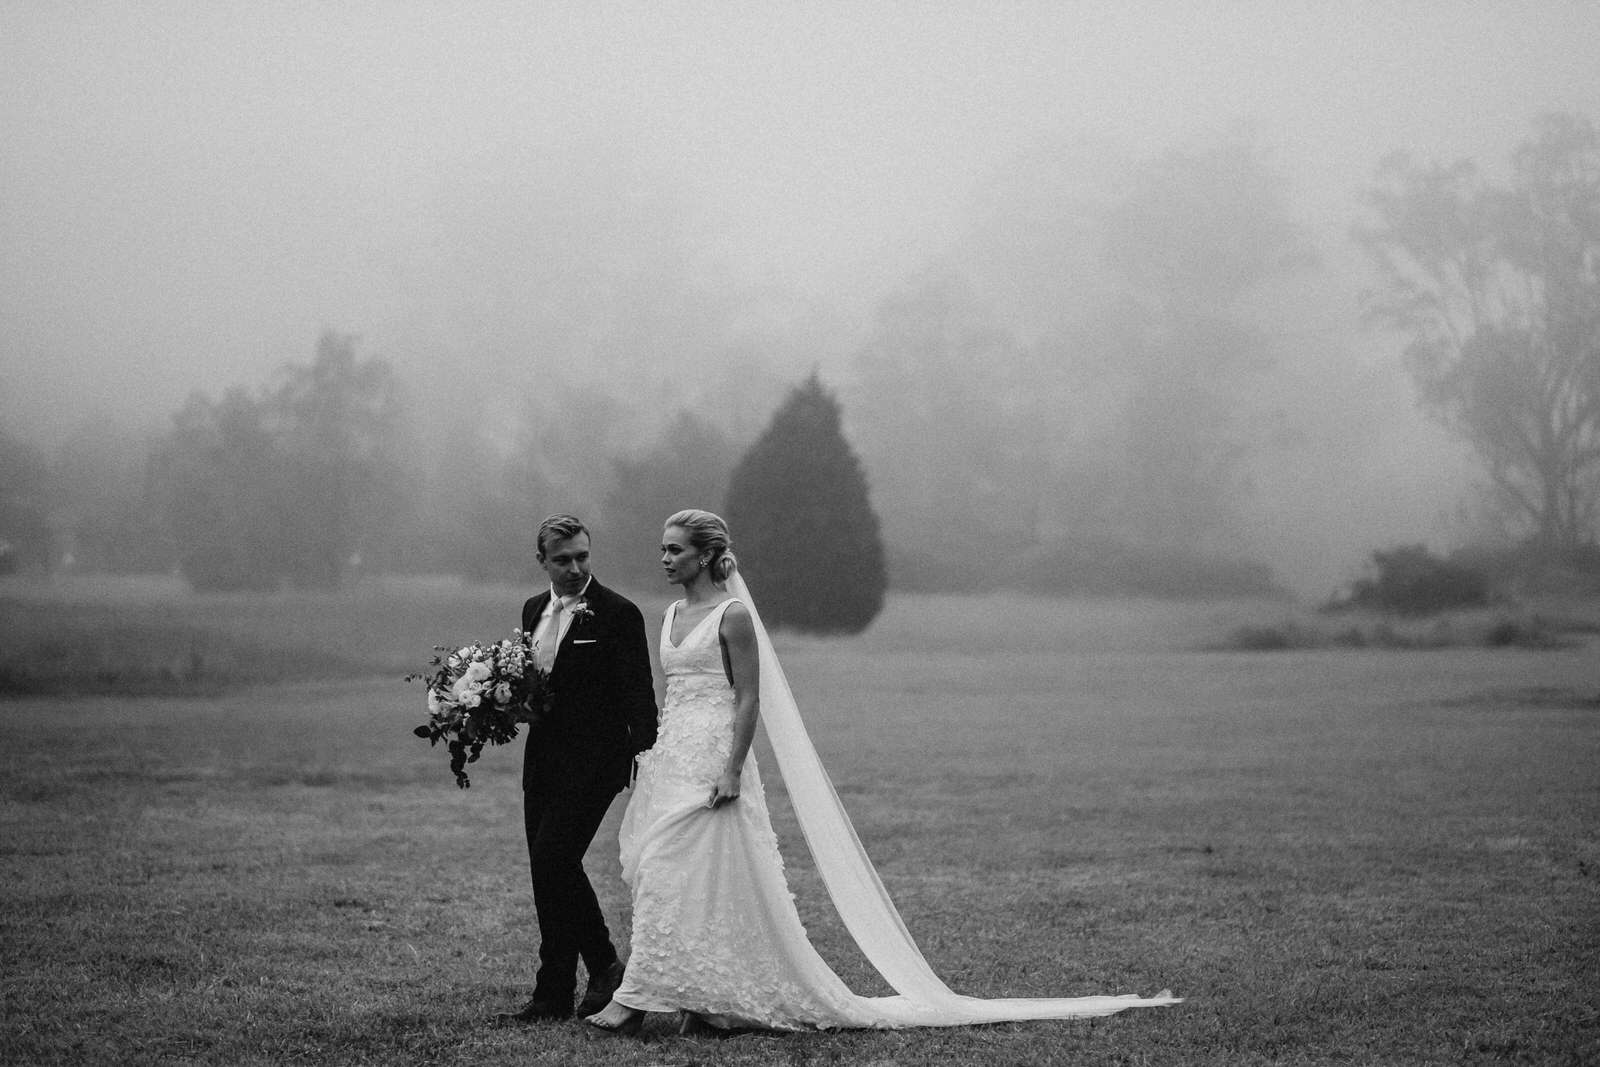 Toowoomba Wedding Photographer, couple walking in thick fog of Toowoomba across field.